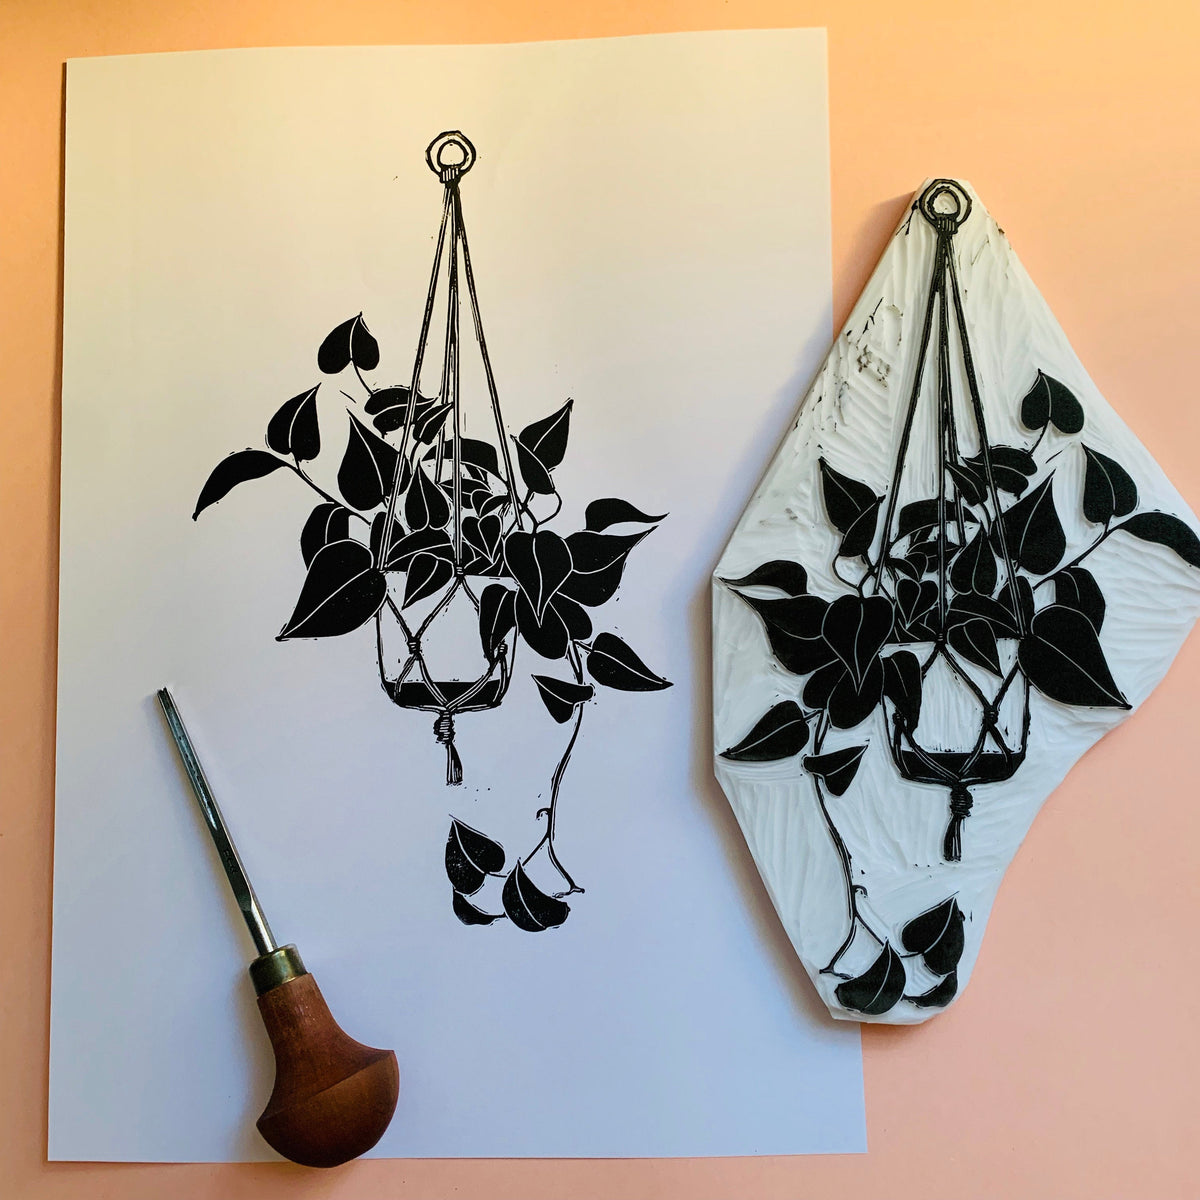 Philodendron Cordatum - limited edition linocut print